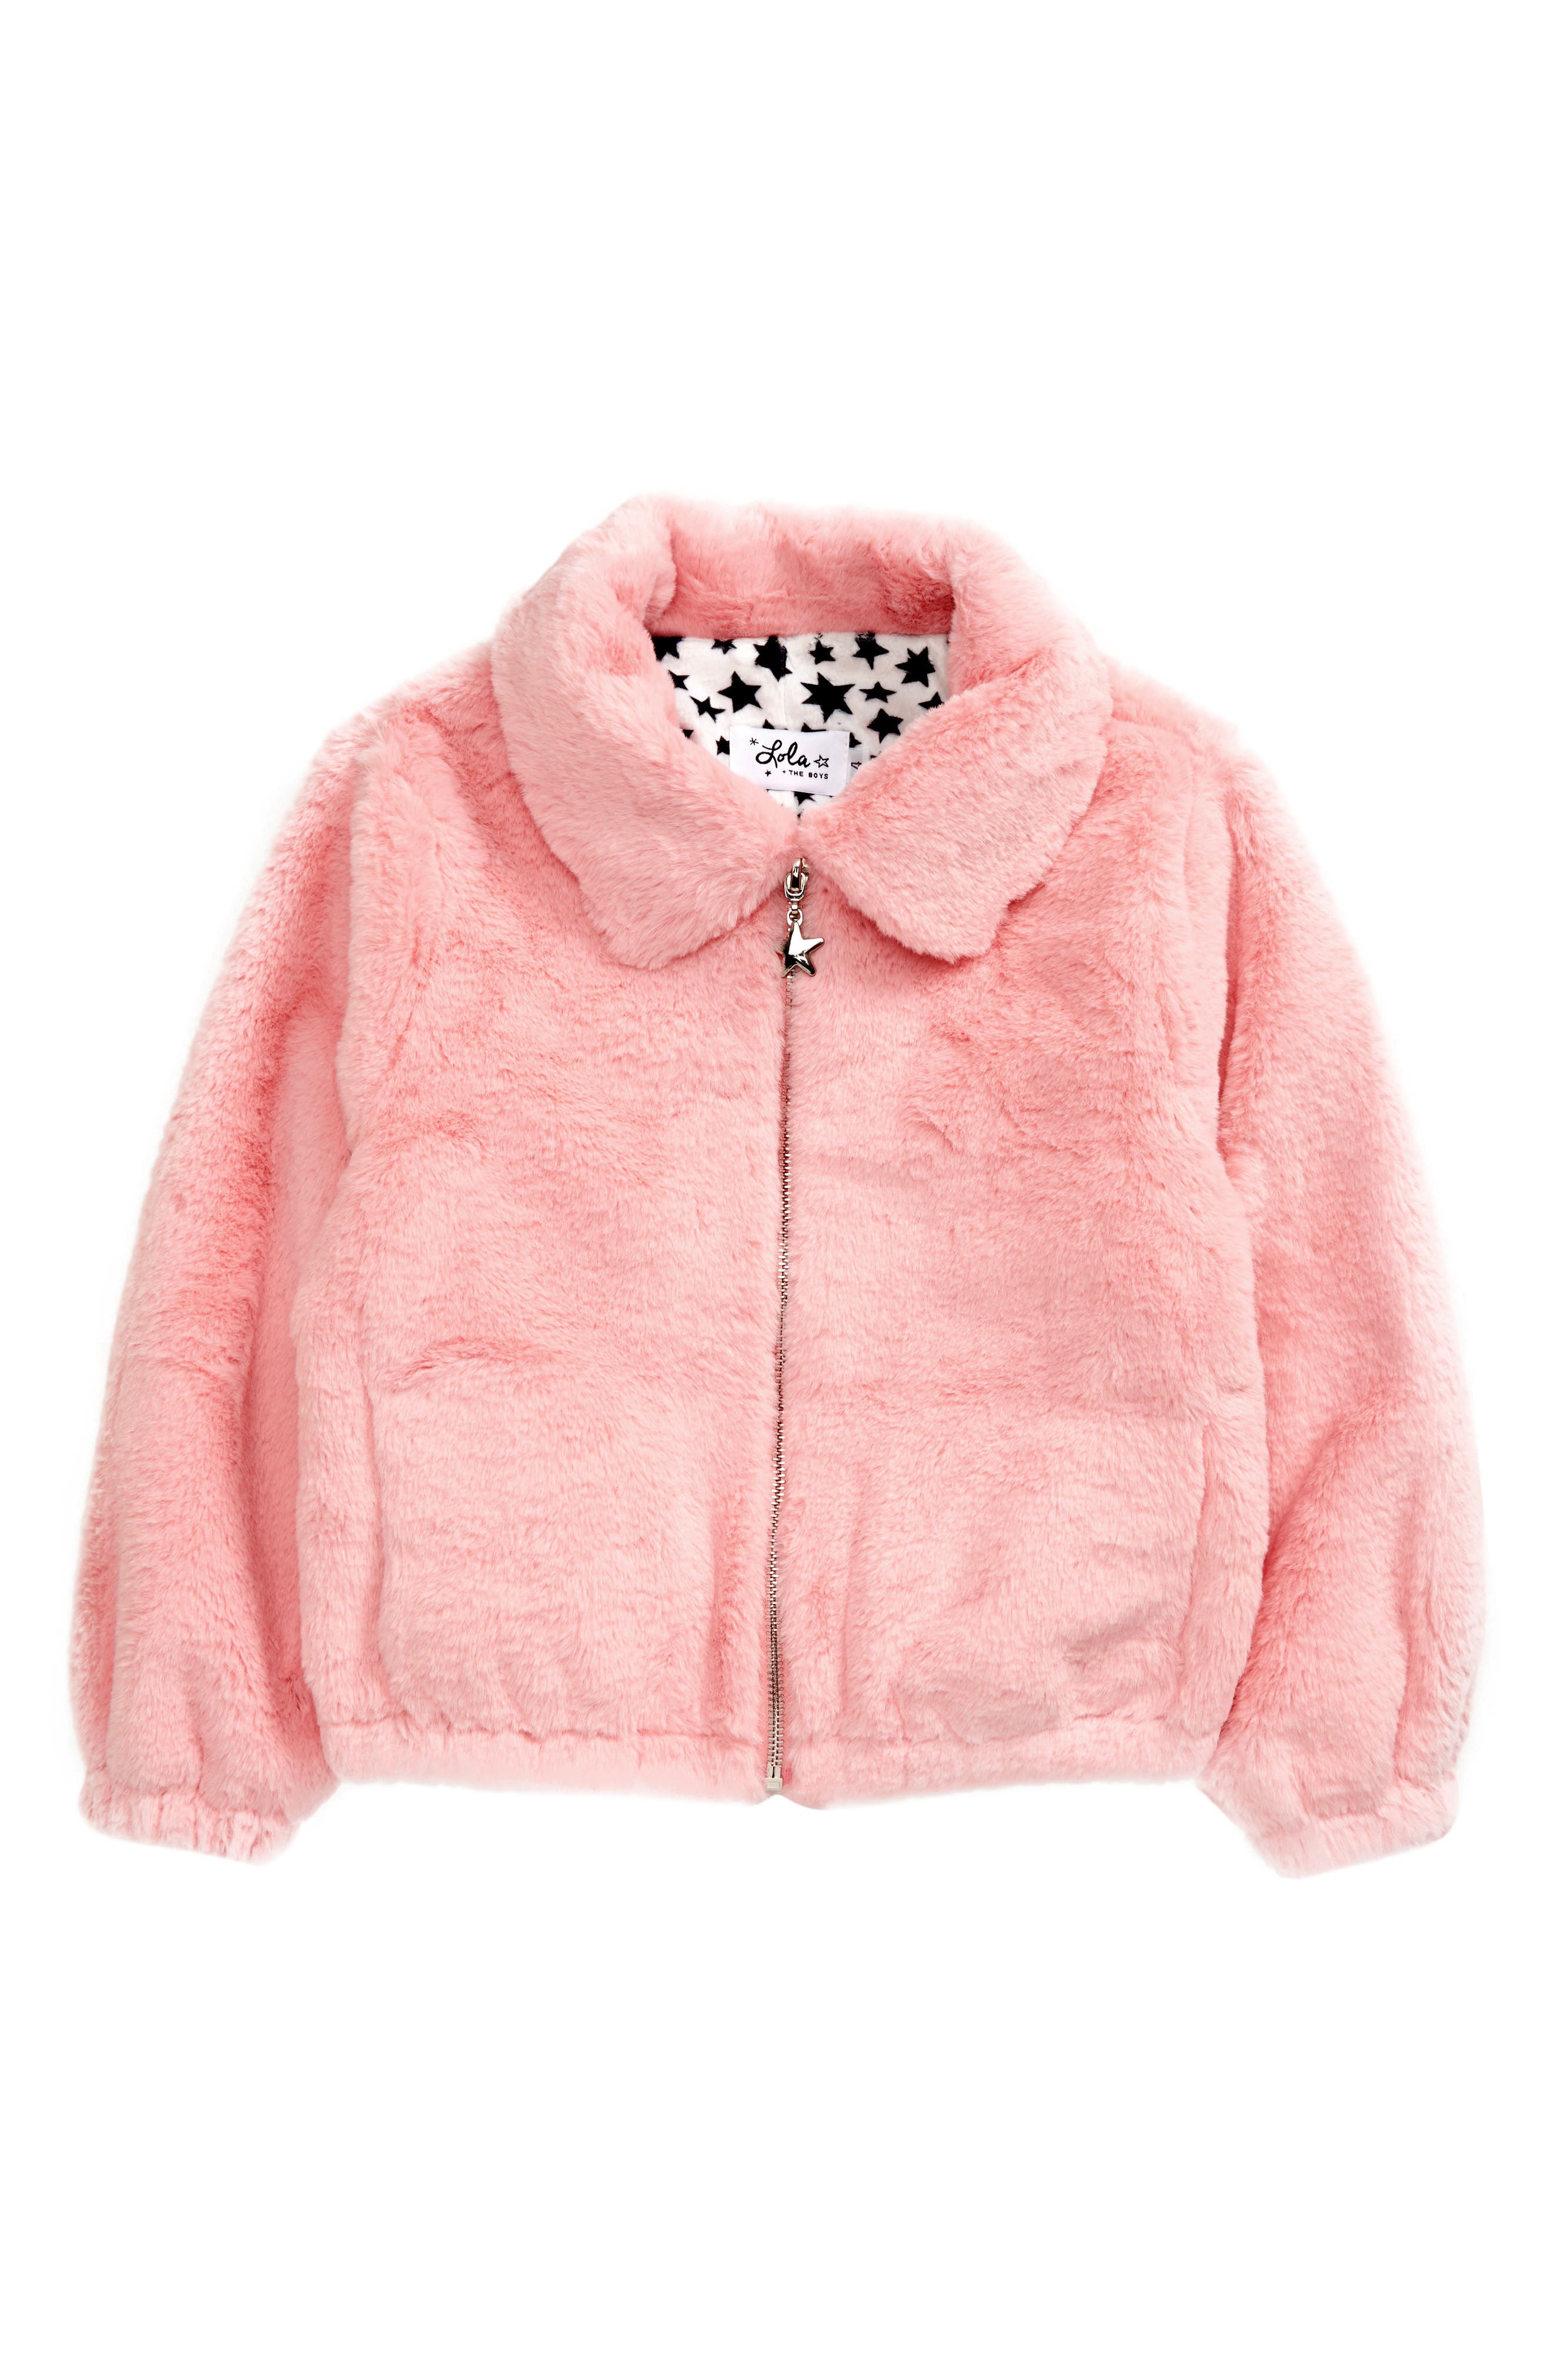 Lola + The Boys Hot Pink Faux Fur Coat, 2